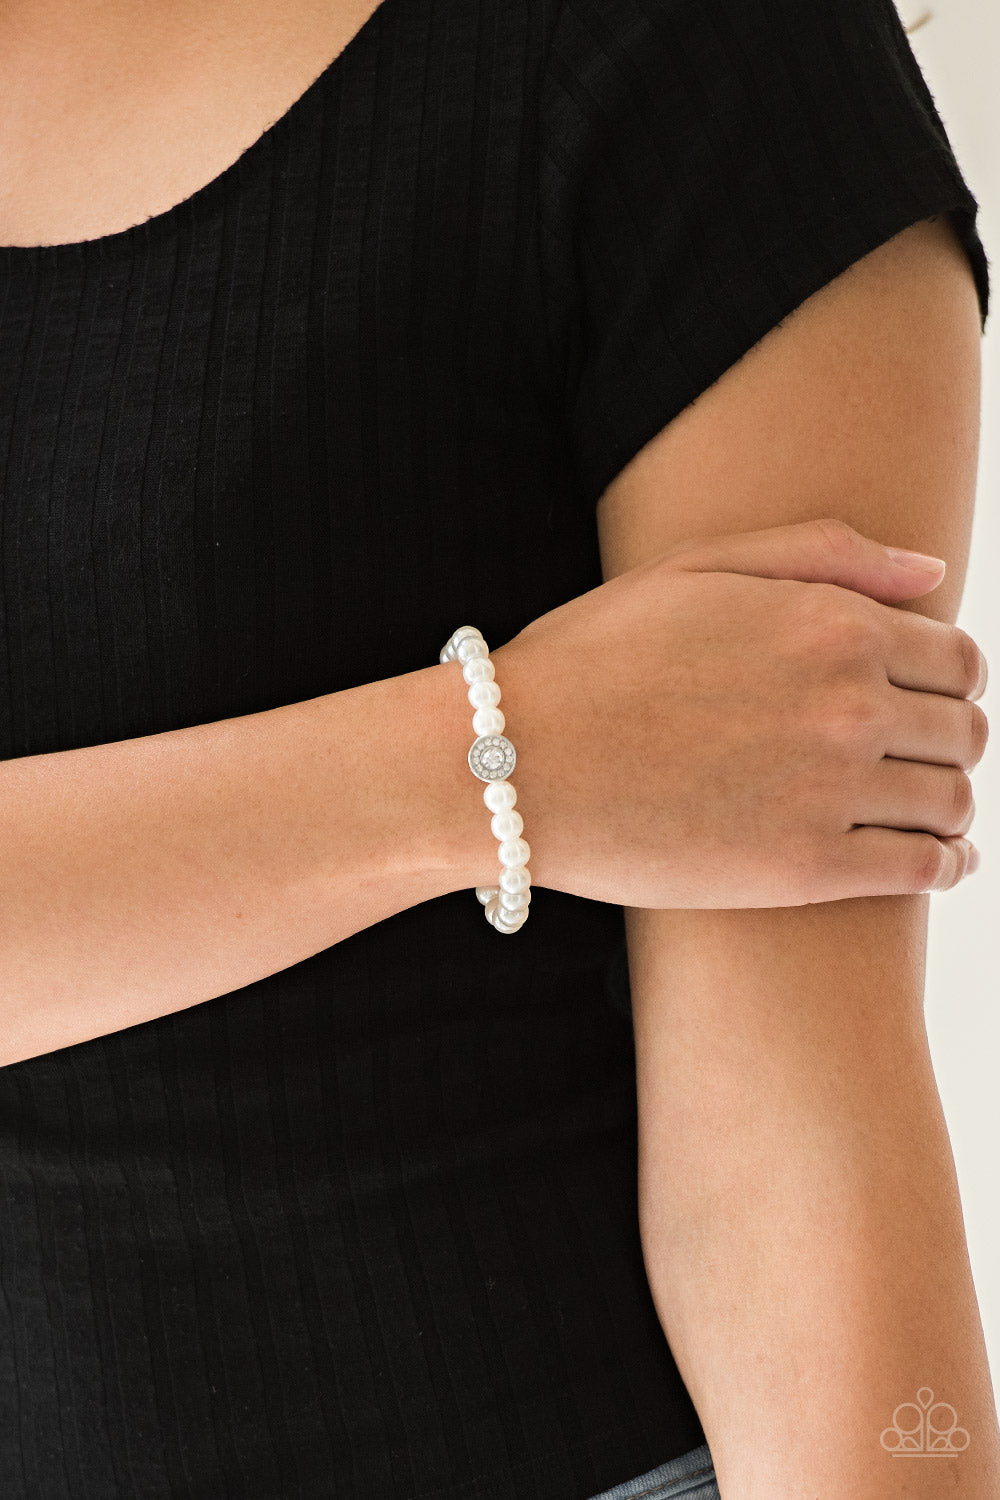 Follow My Lead White Pearl Bracelet - Paparazzi Accessories